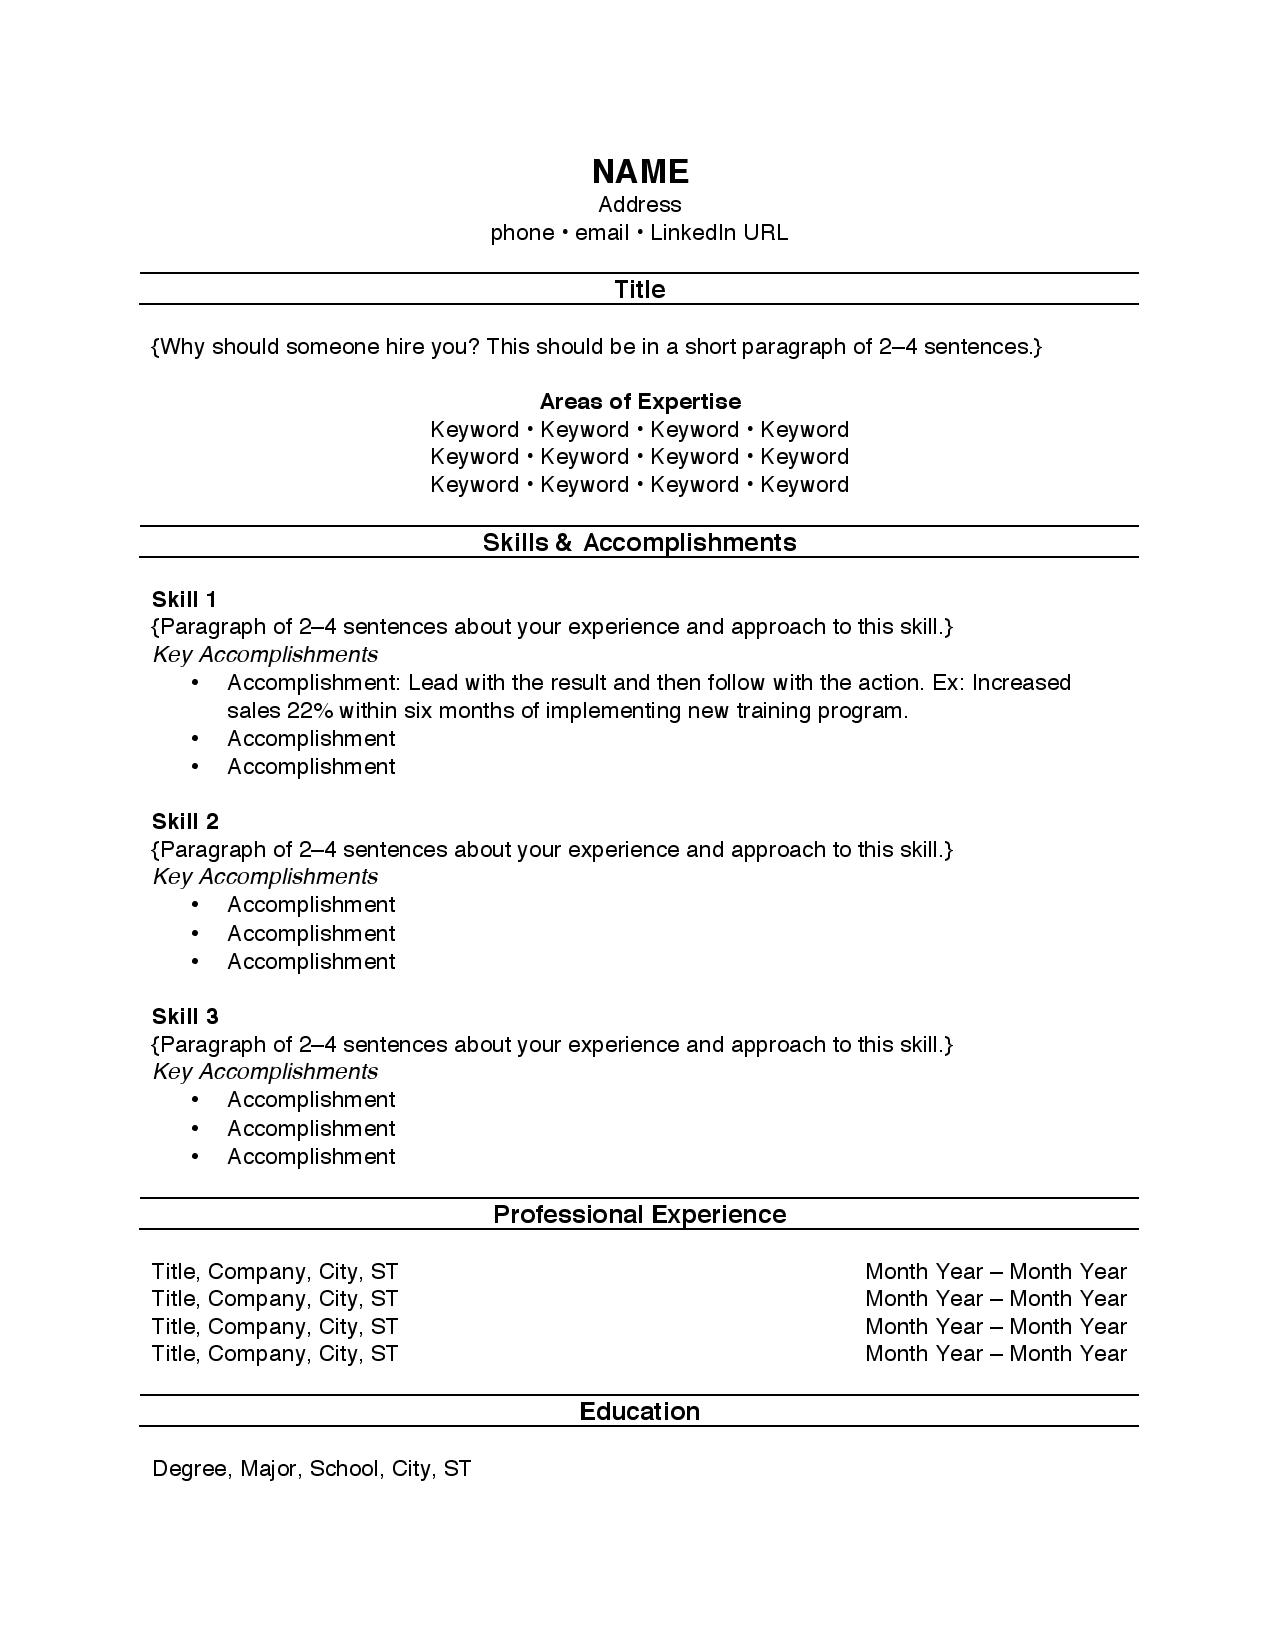 Functional Resume Template Functional Resume Template Page 001 functional resume template|wikiresume.com